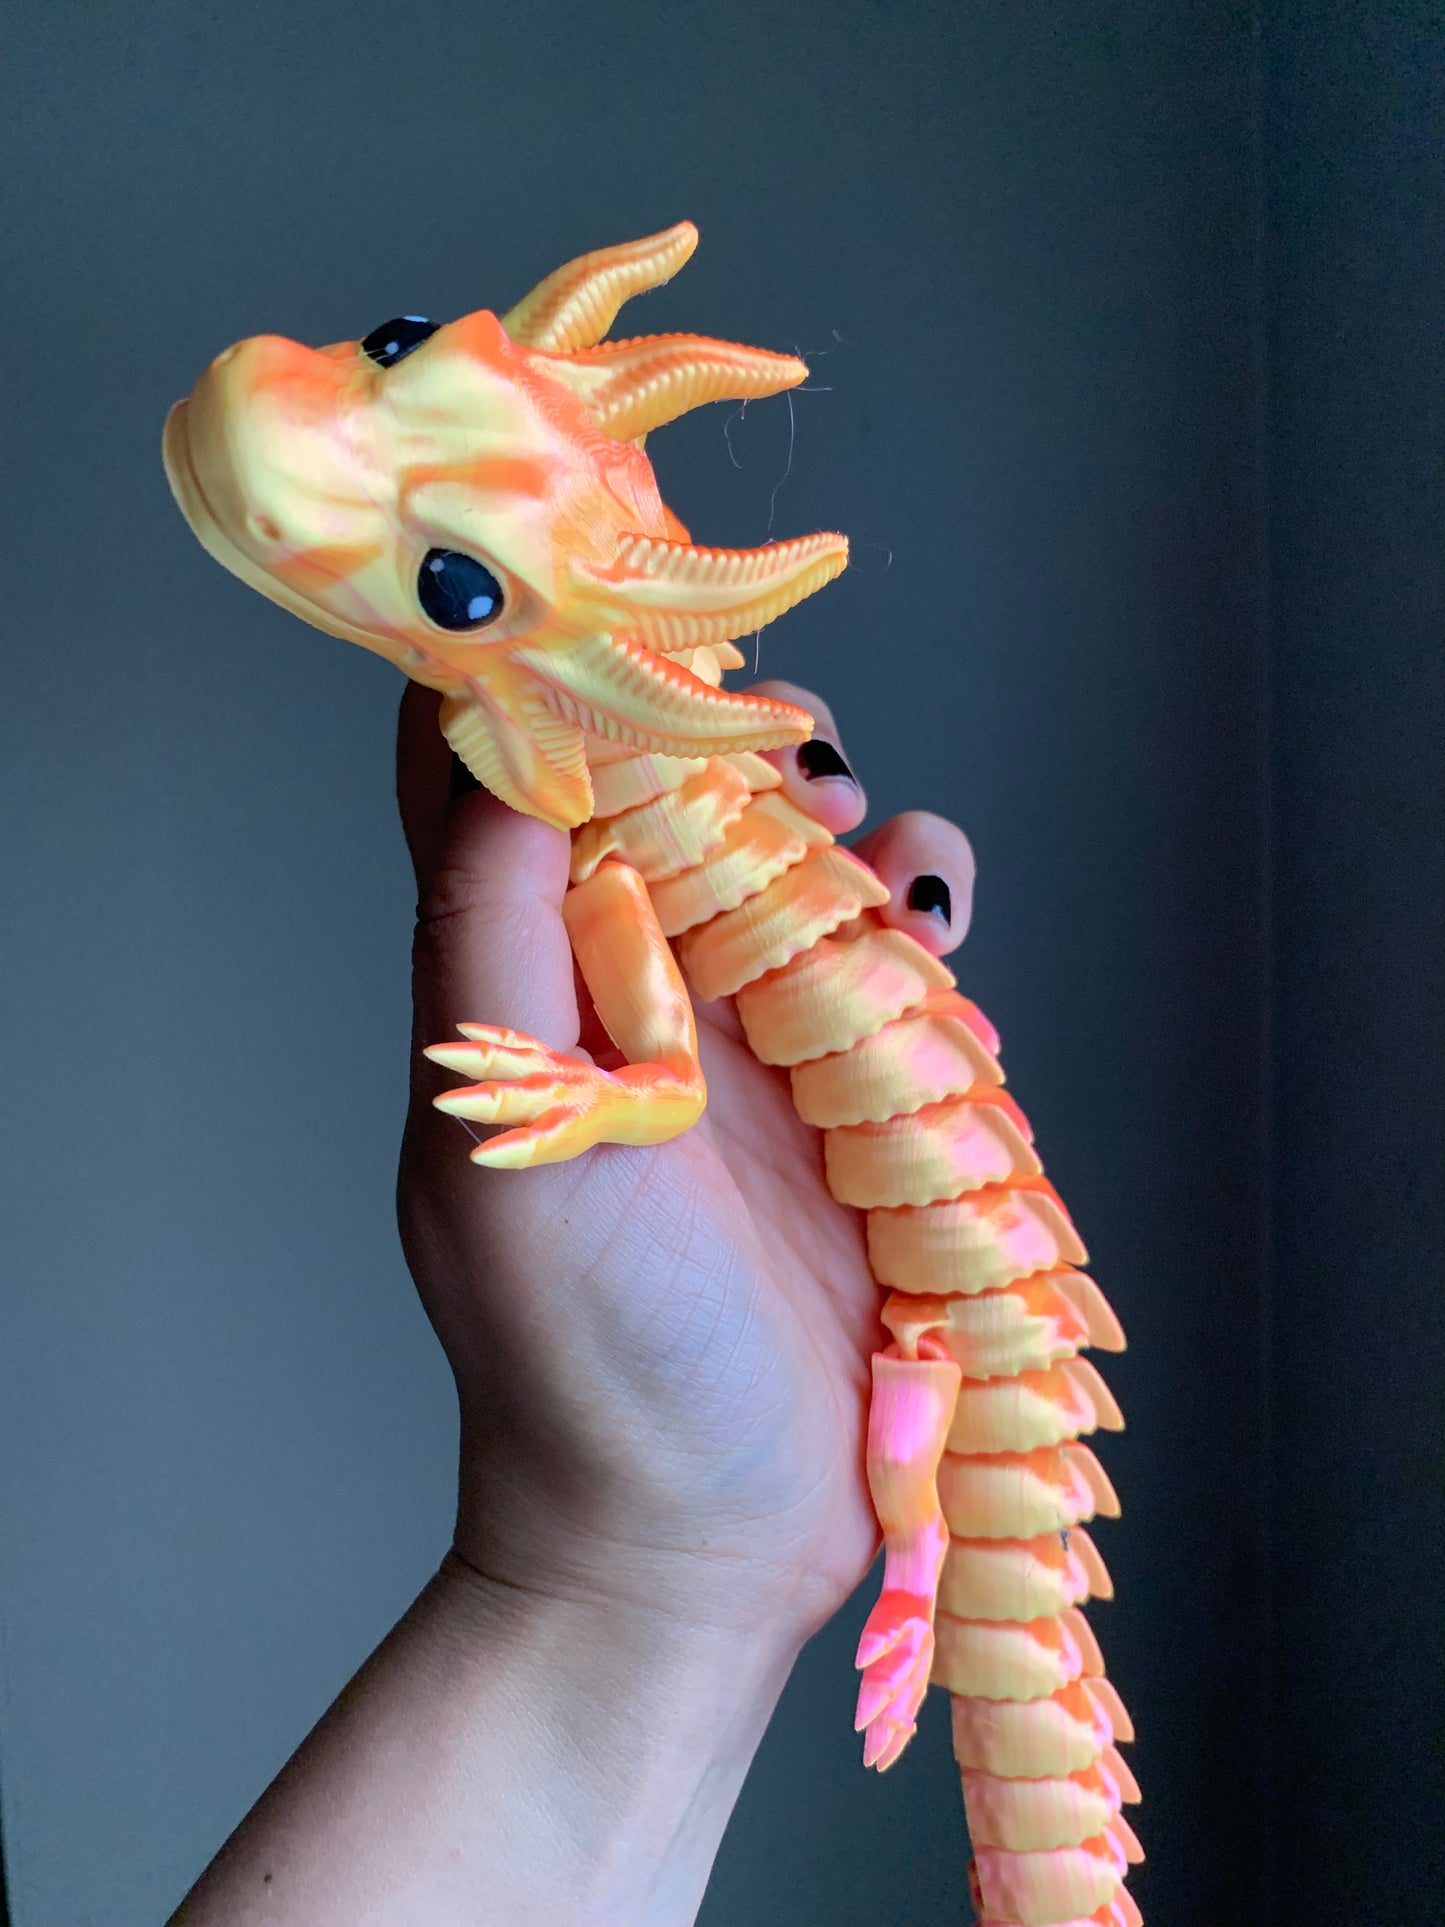 Dragon Flexi Model Toy